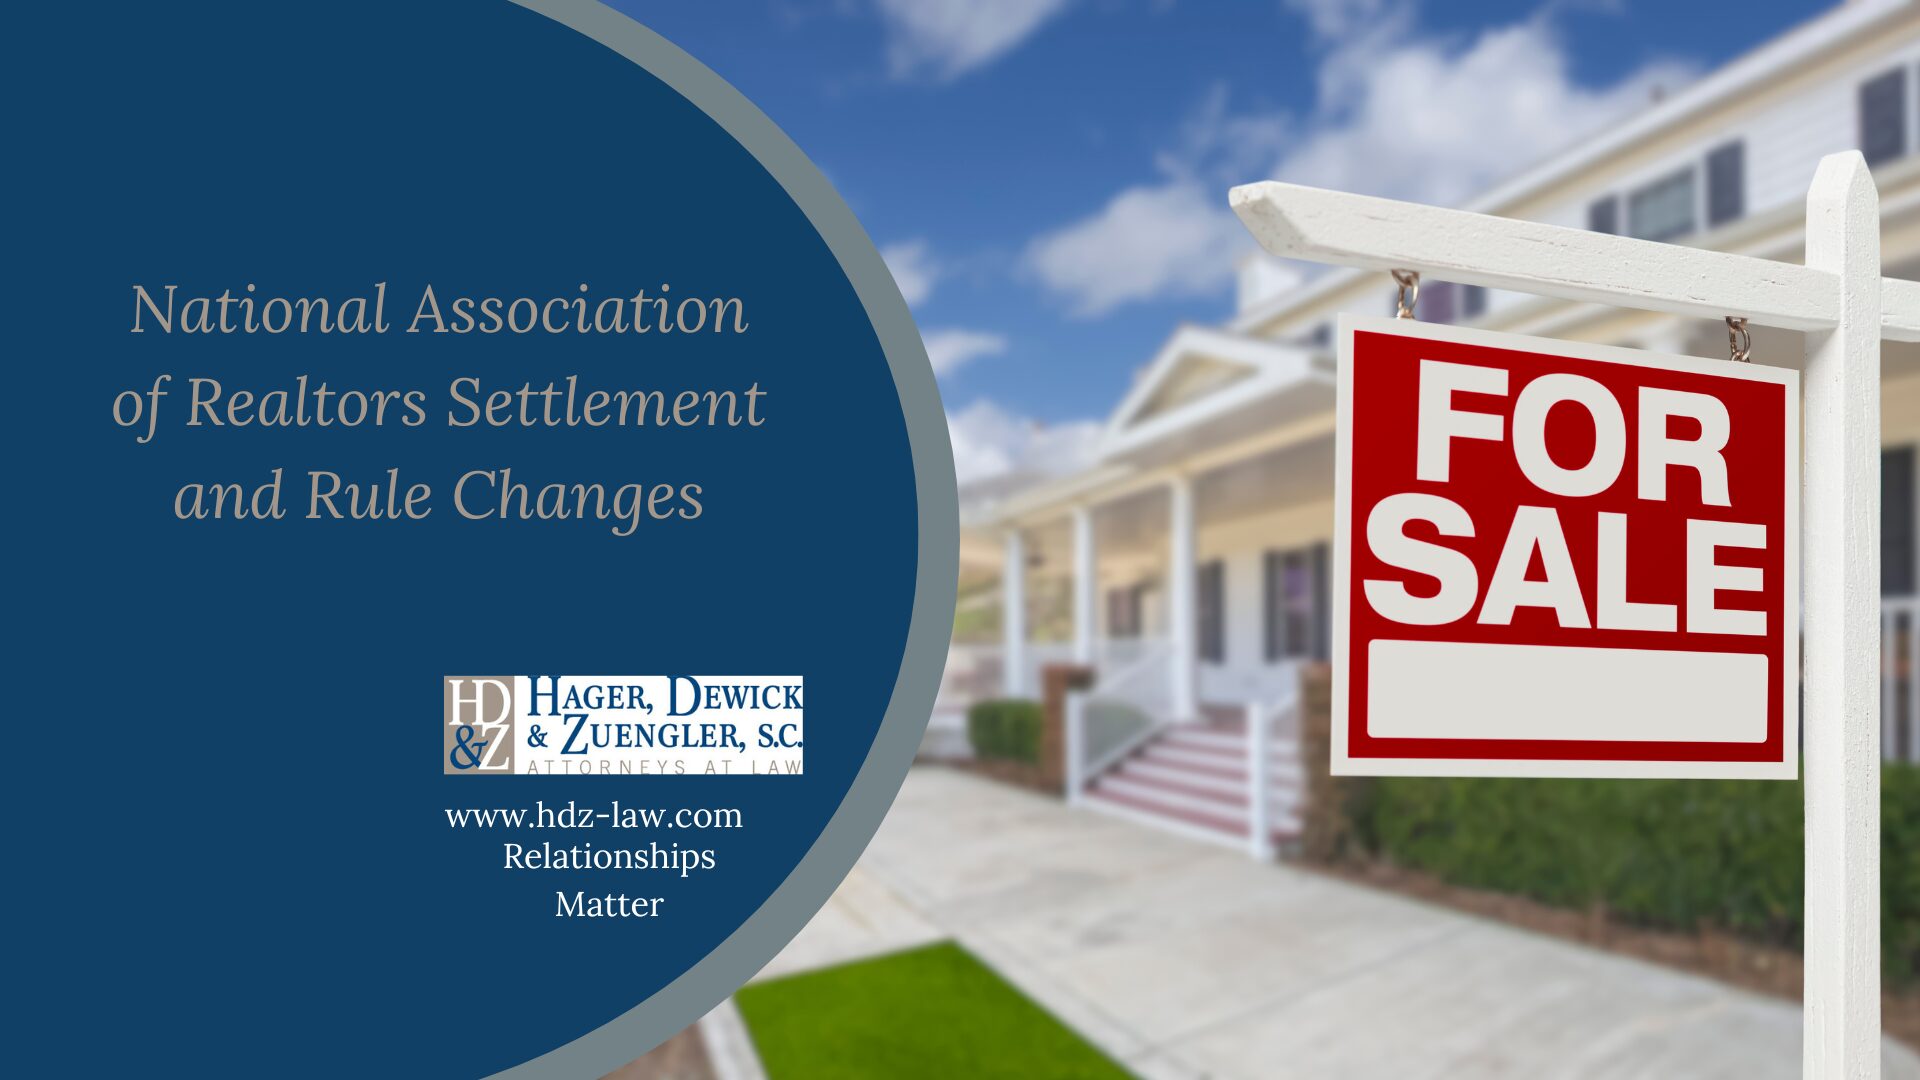 National Association of Realtors Settlement and Rule Changes